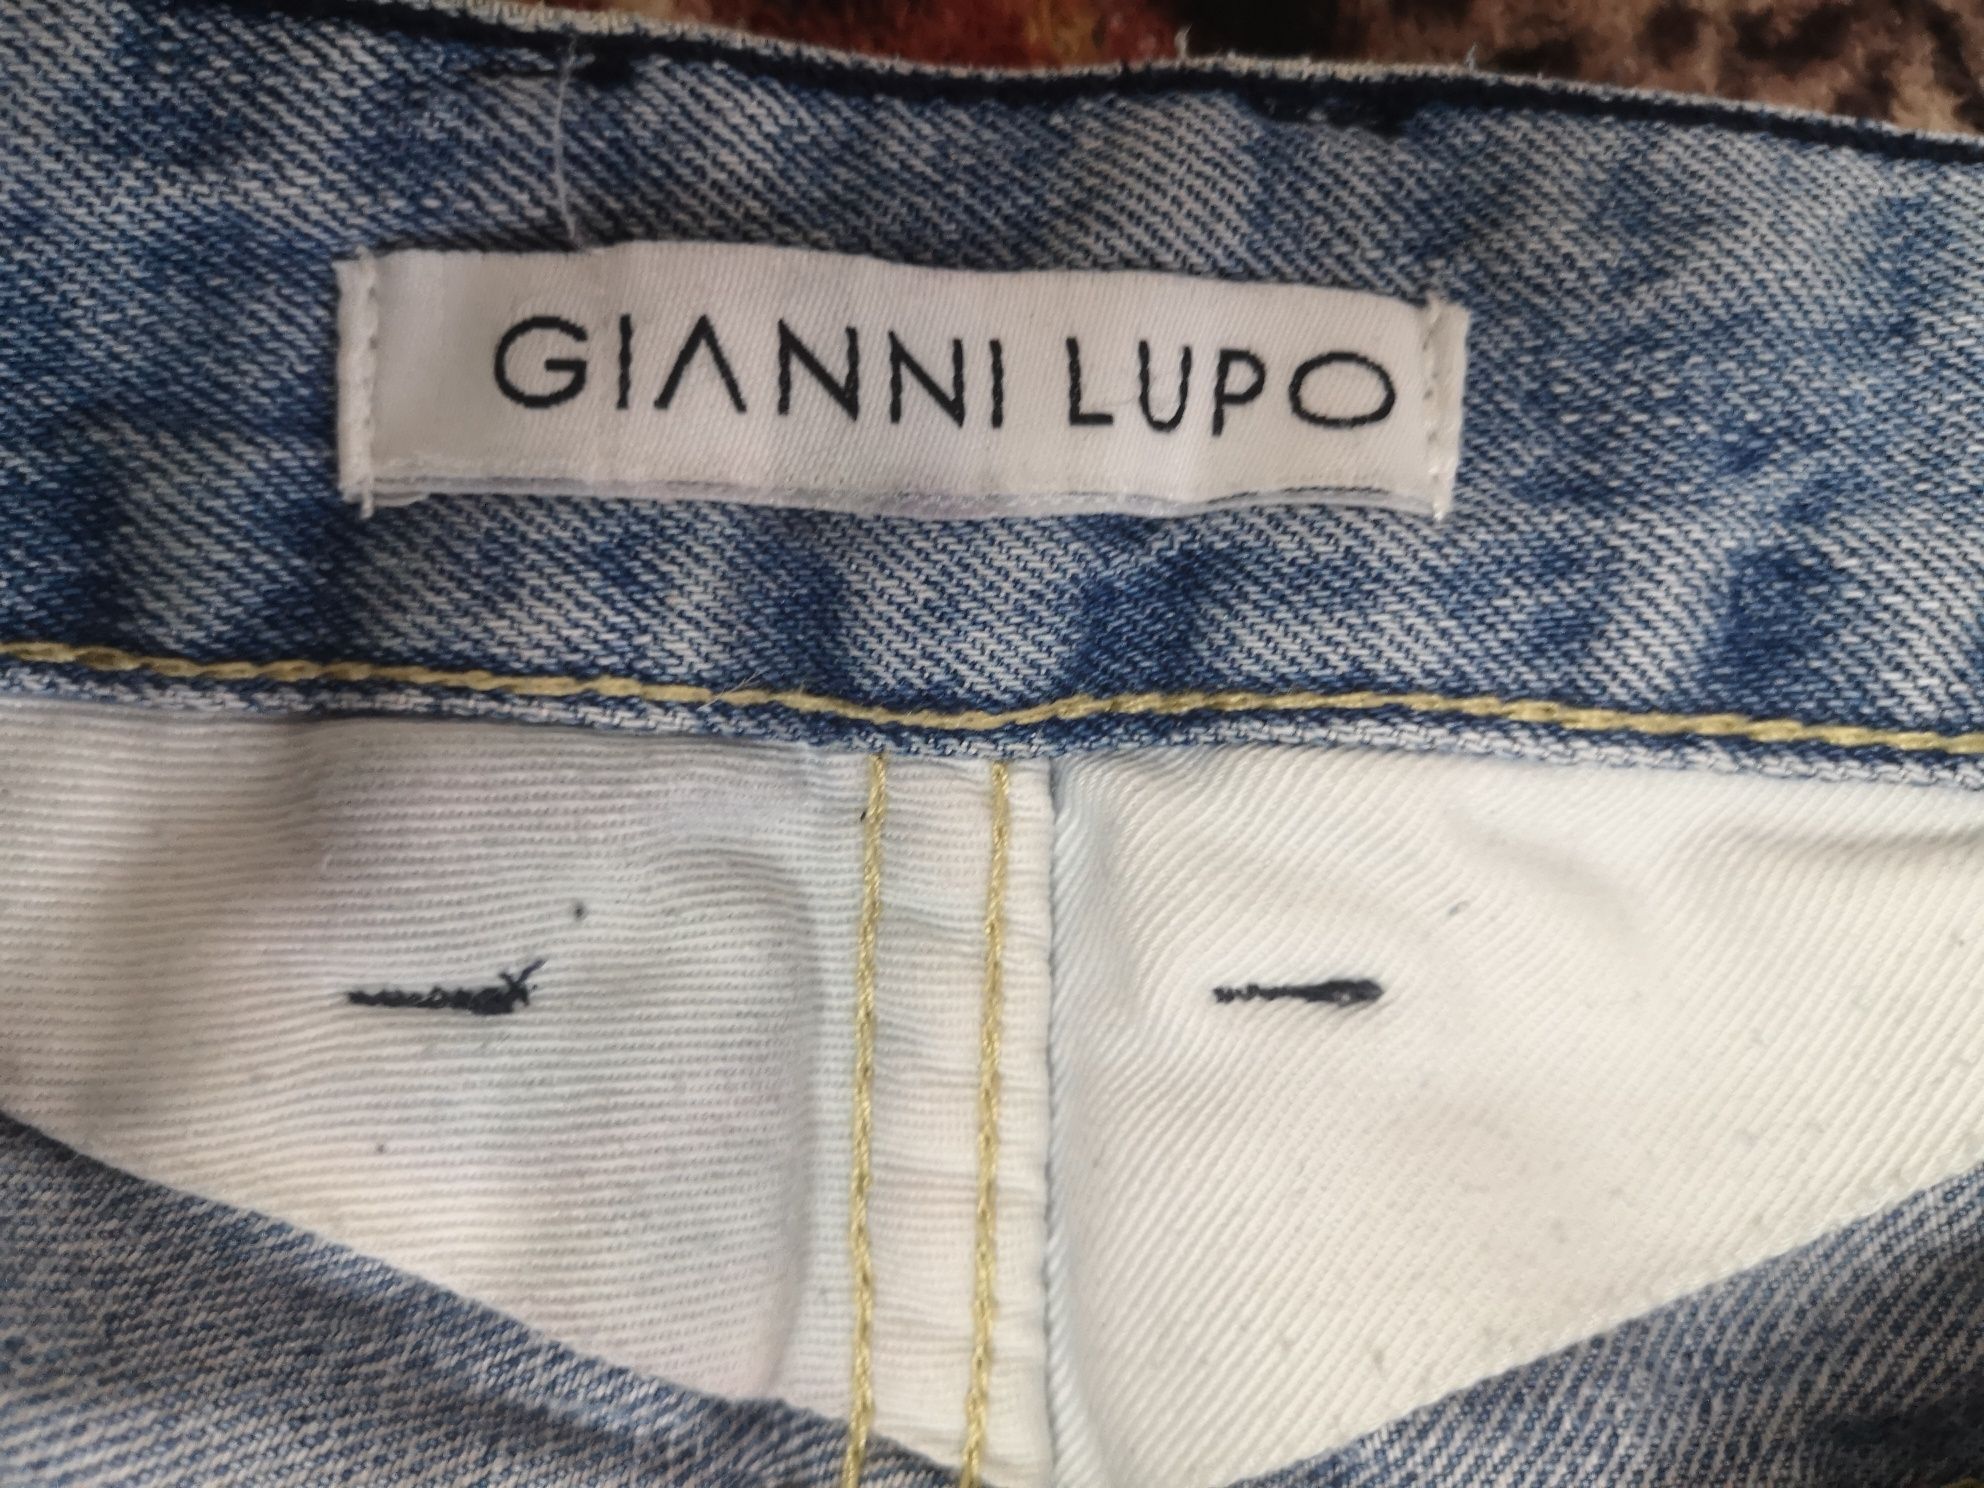 Продам джинсы Gianni lupo.